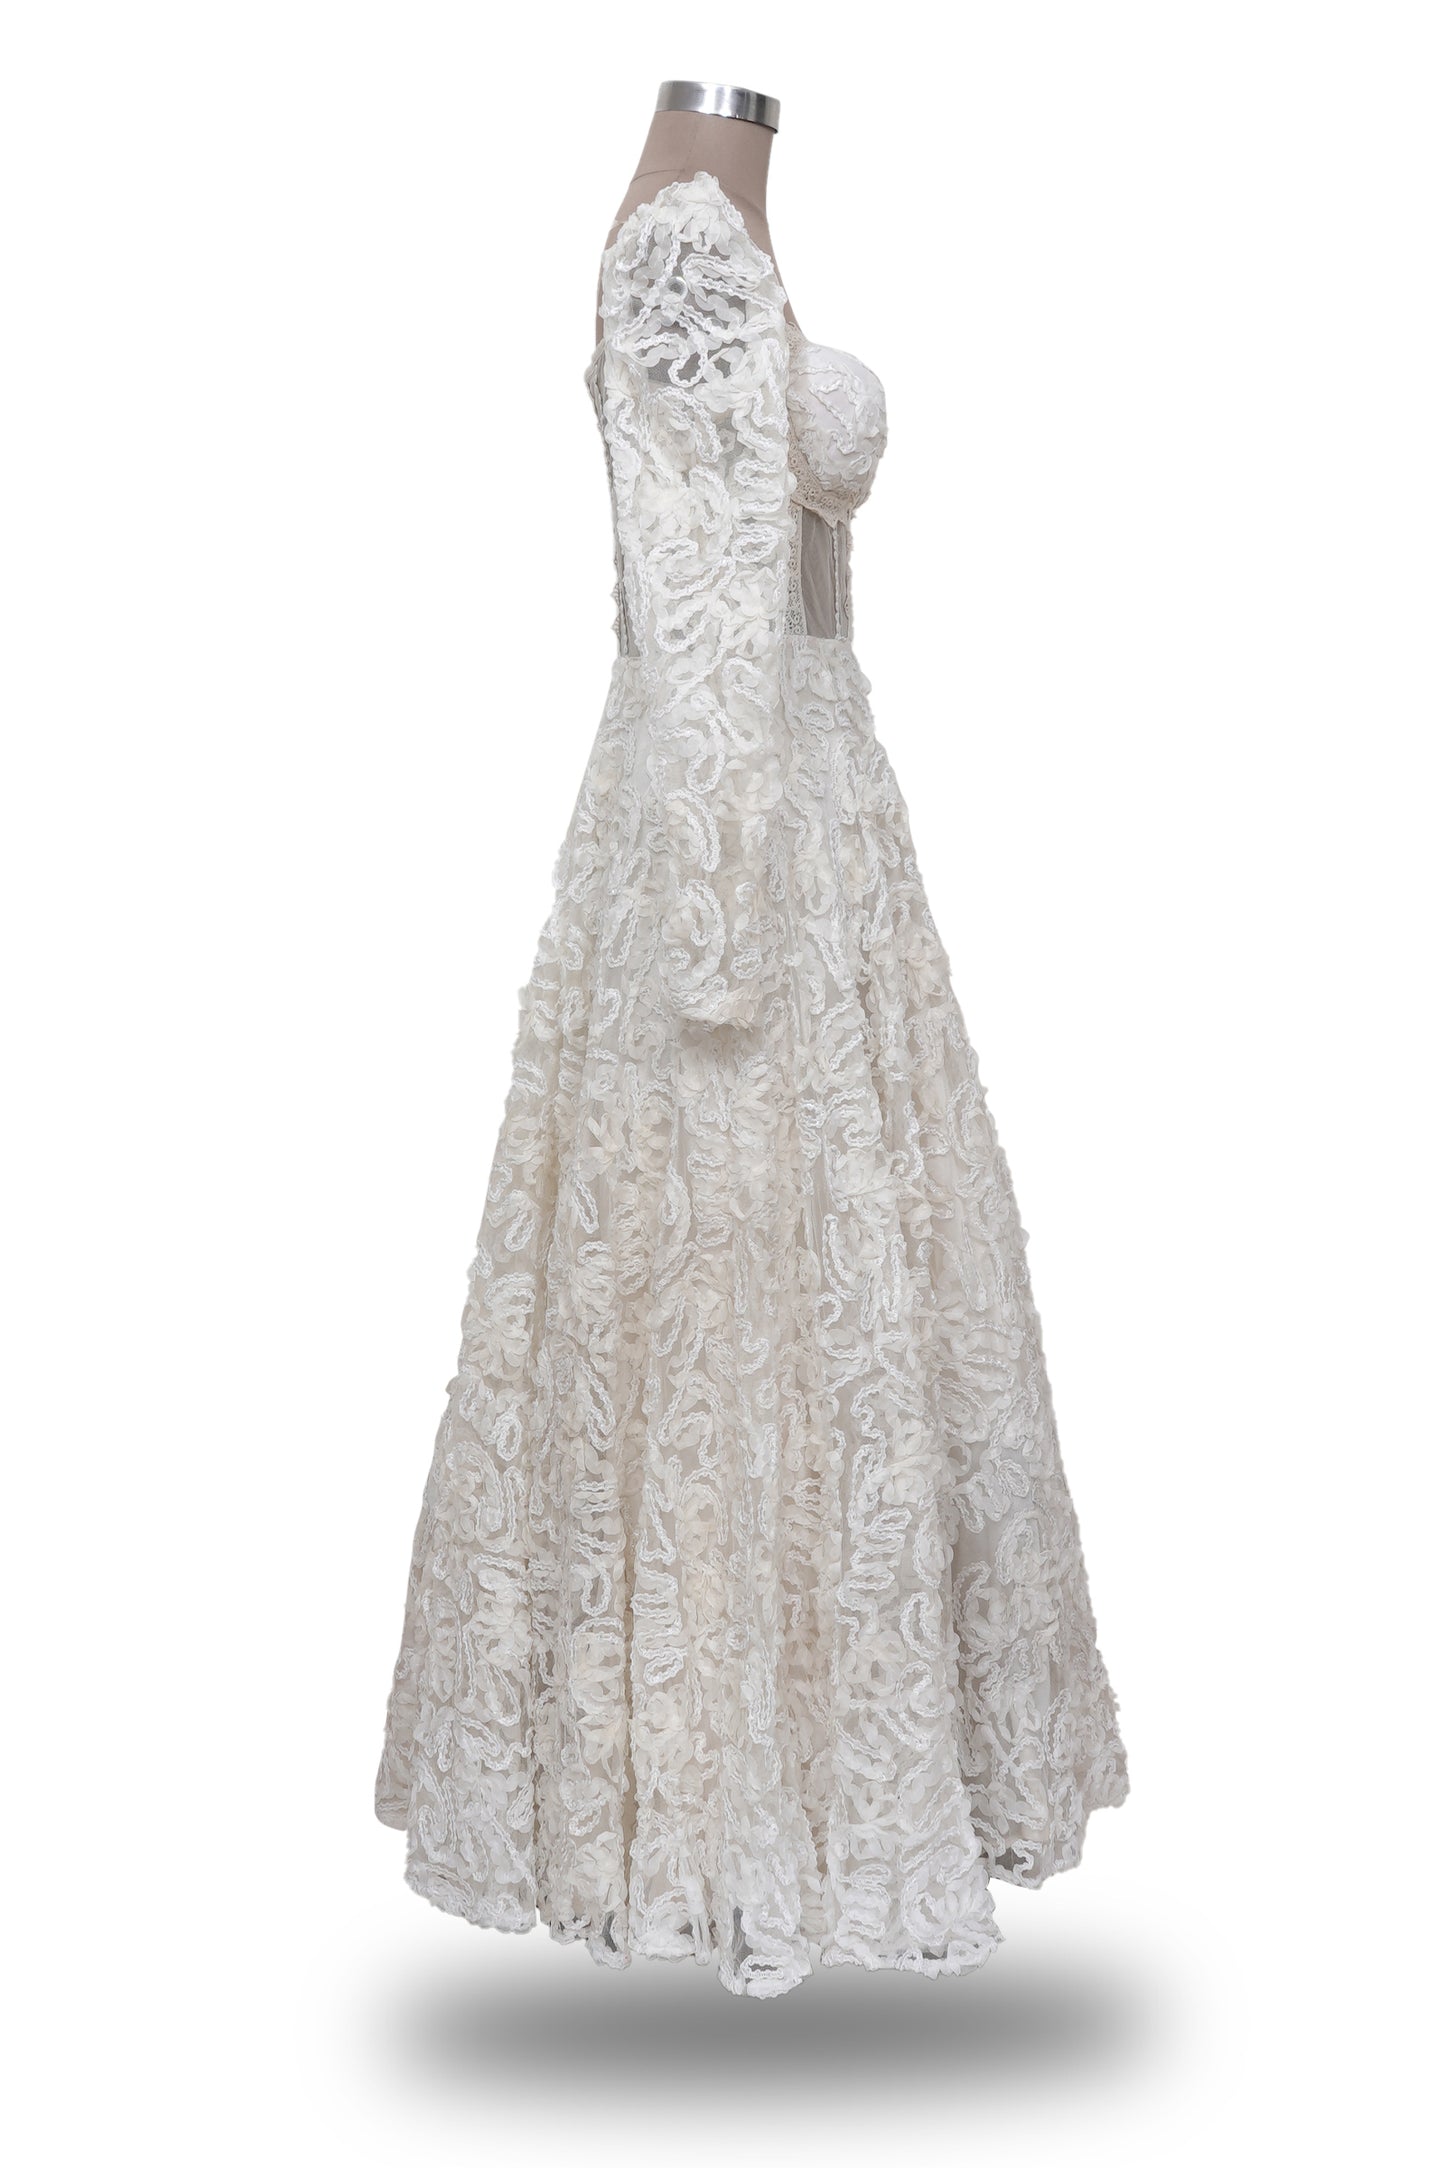 "The Enchanting Elysian Lace Dress: A Breatheenmoda Masterpiece"